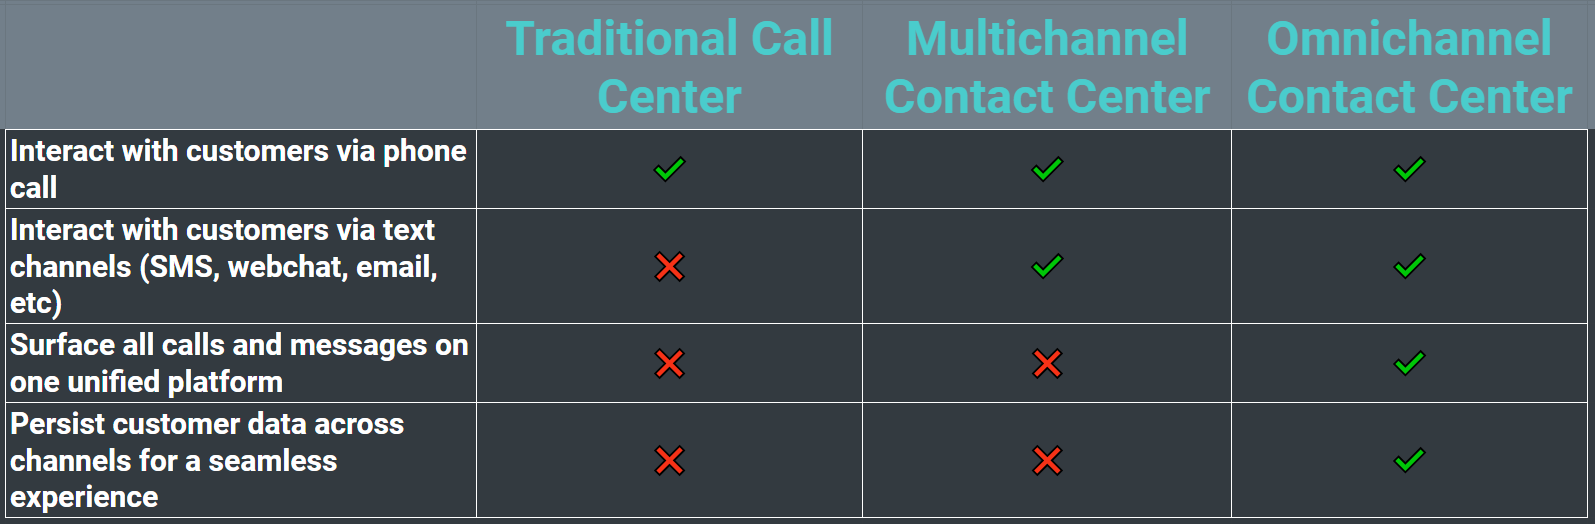 Feature comparison: traditional call center vs contact center; multichannel vs omnichannel.